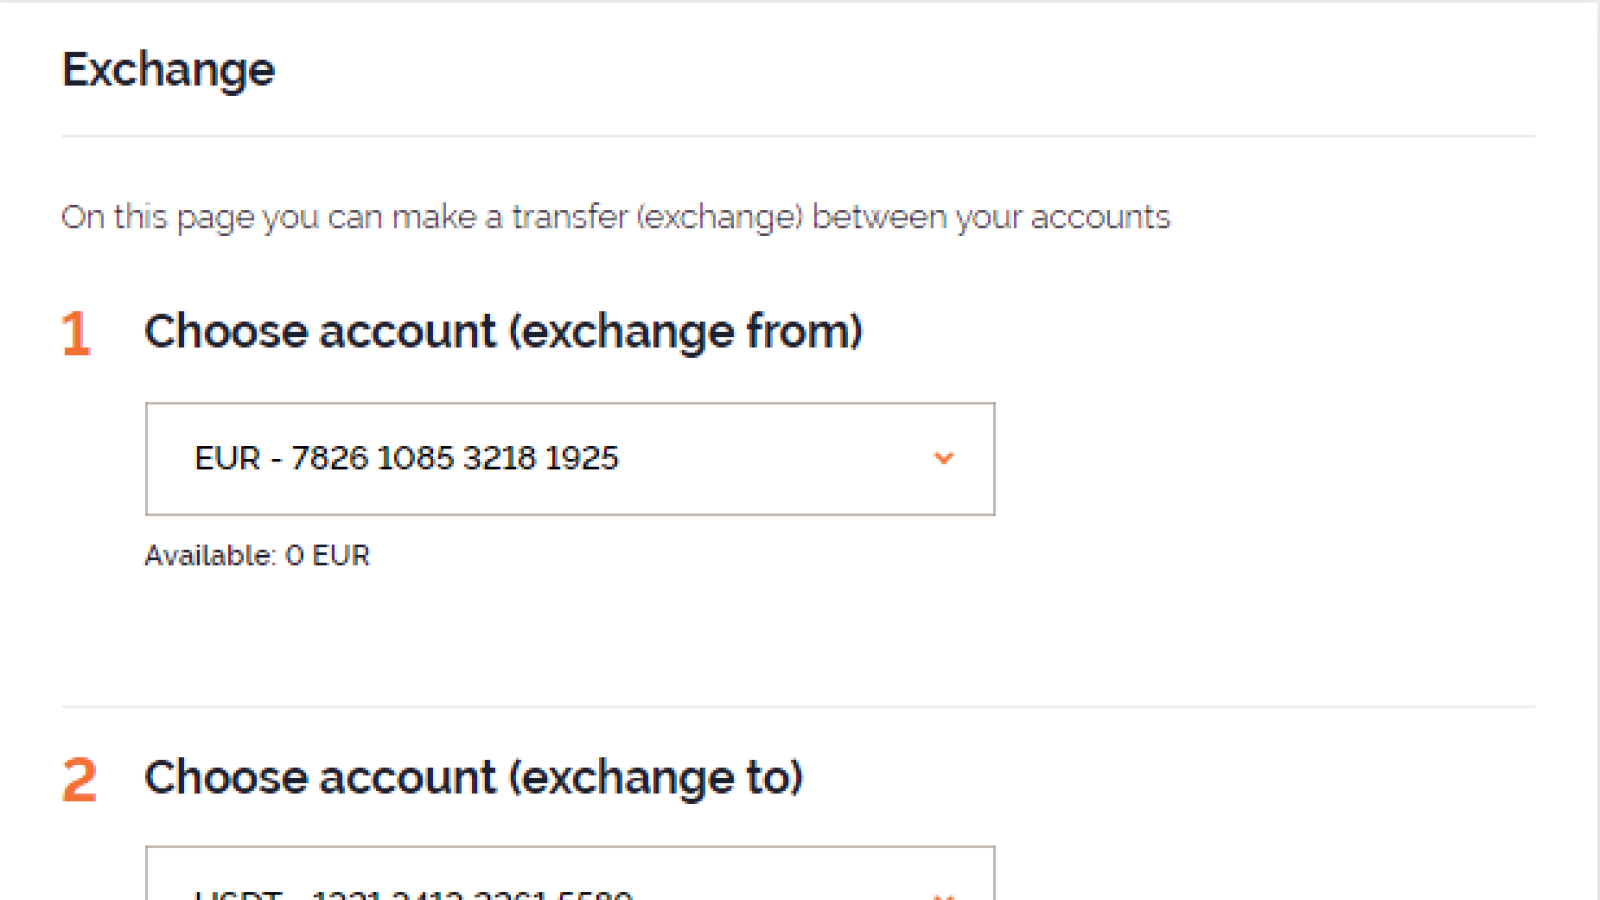 Transfer between accounts